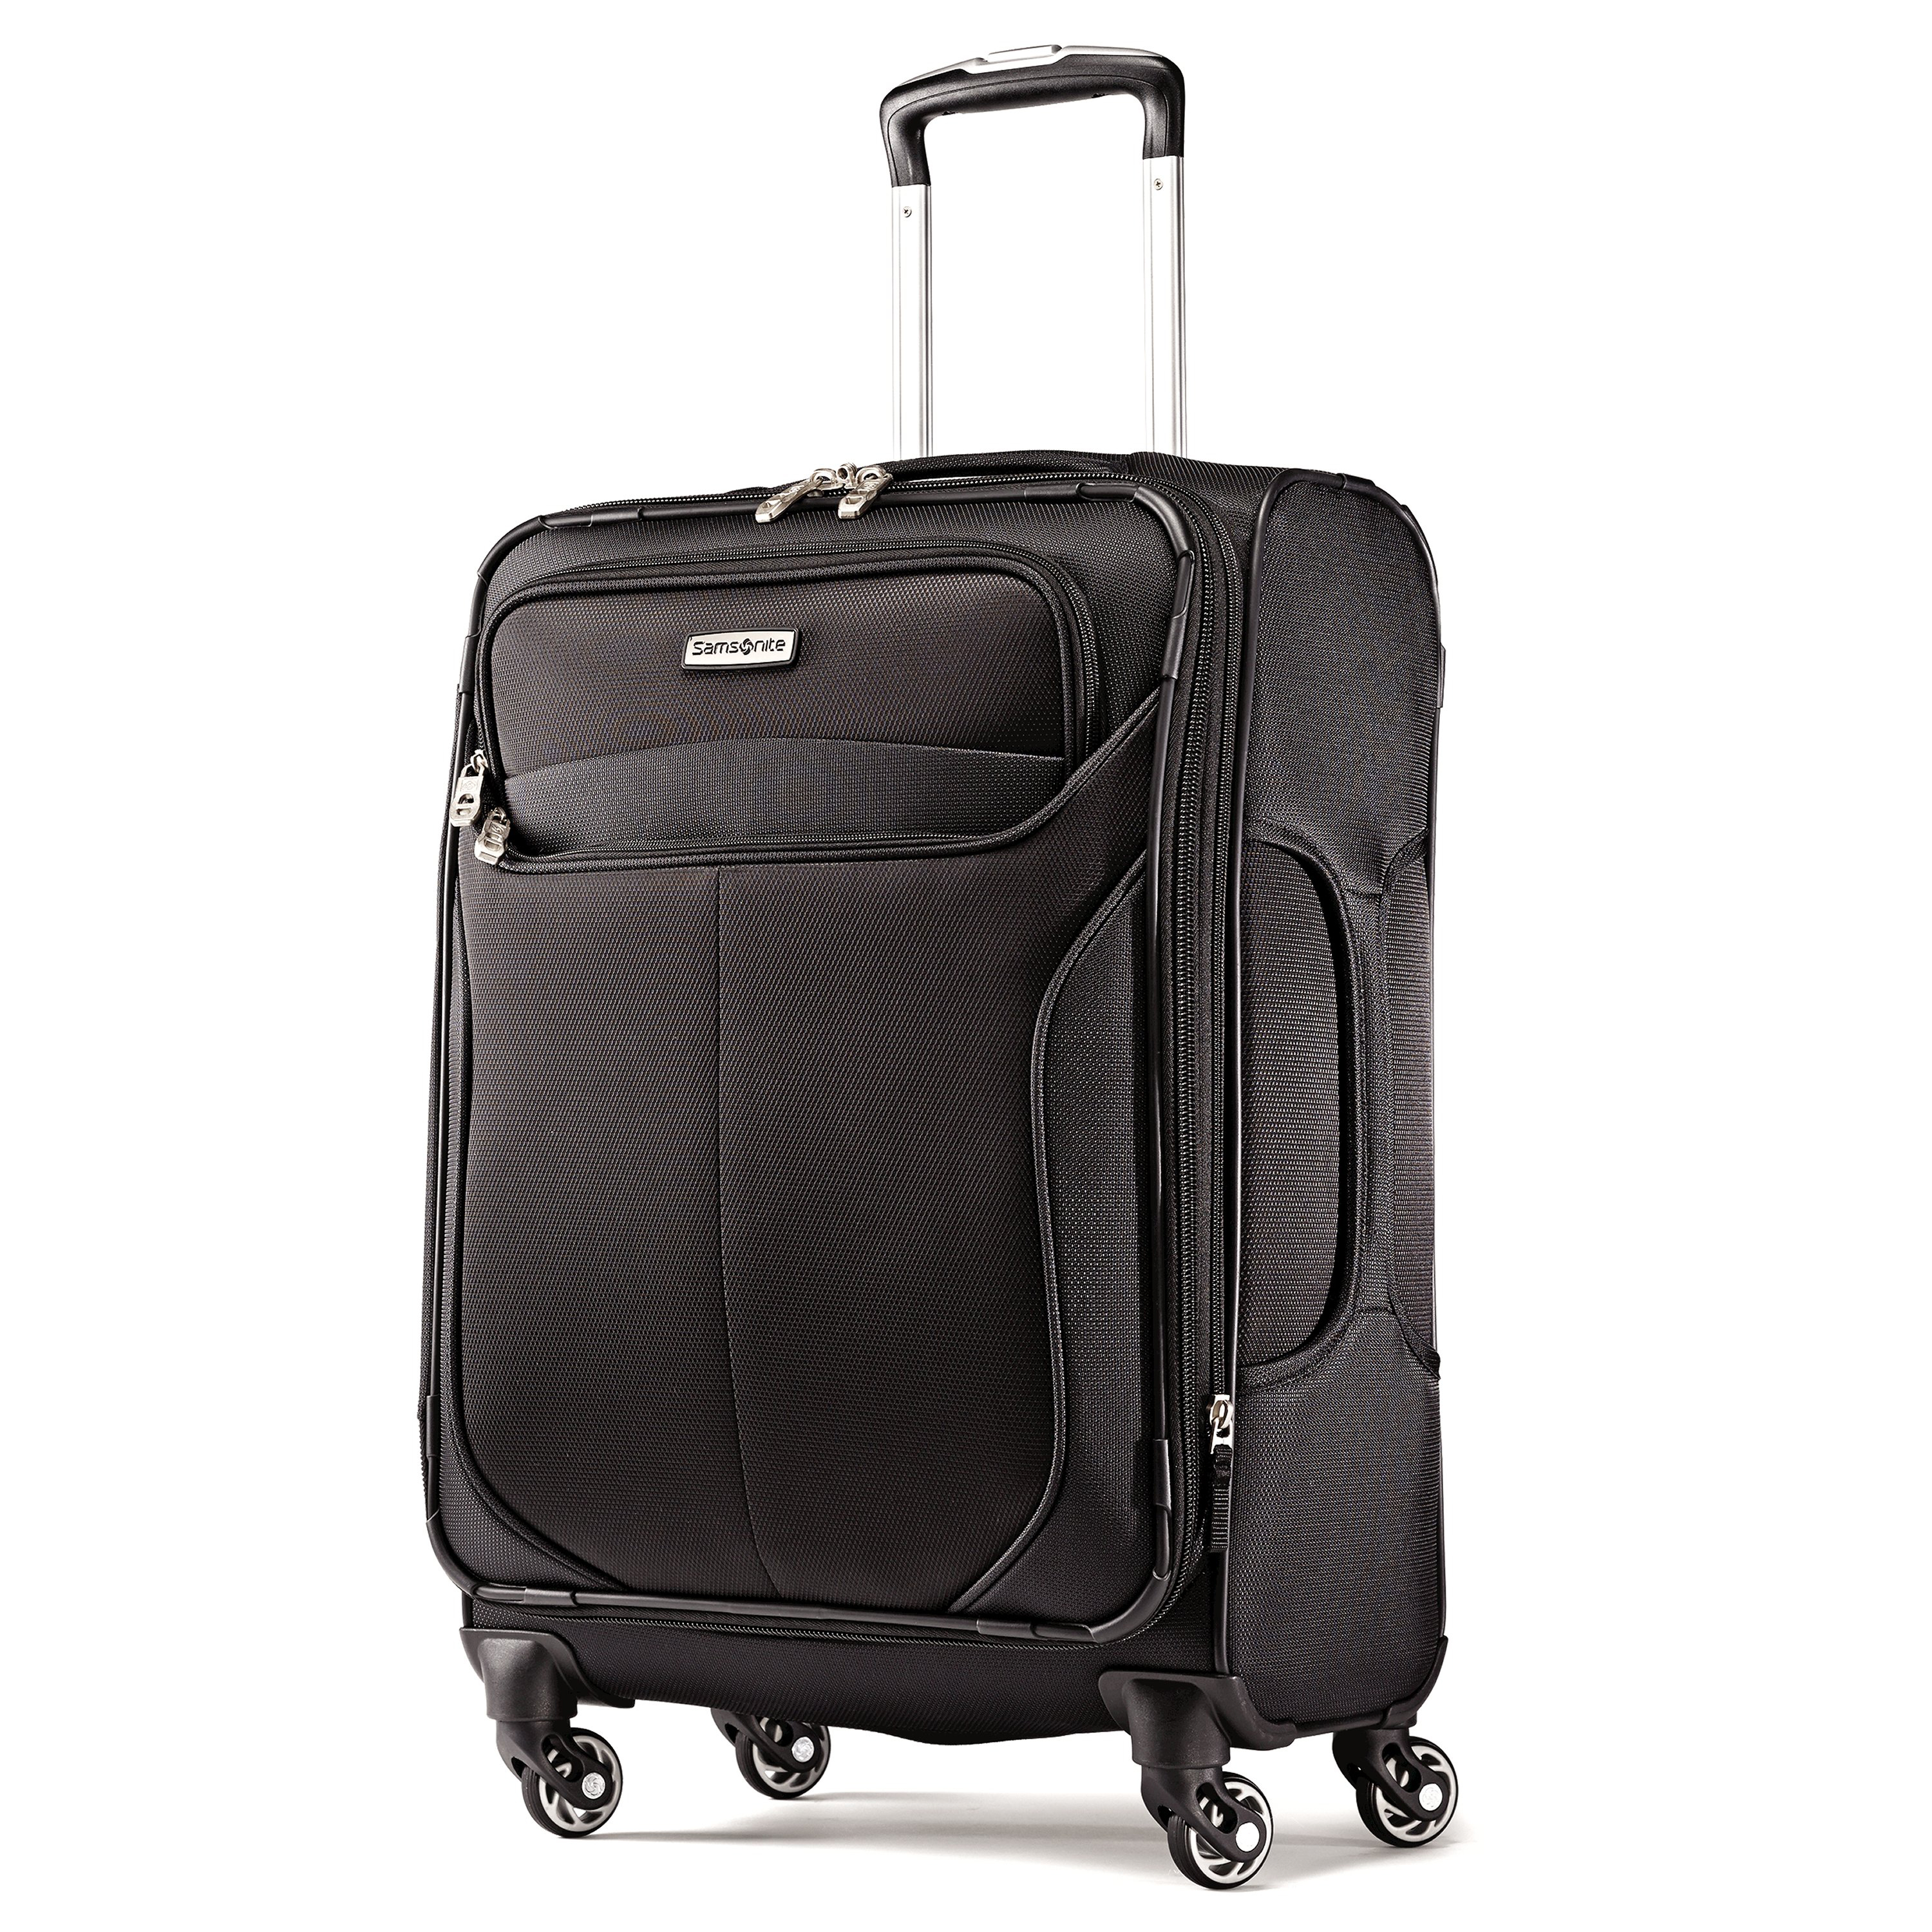 Samsonite Carry-On Spinner - Travel Luggage